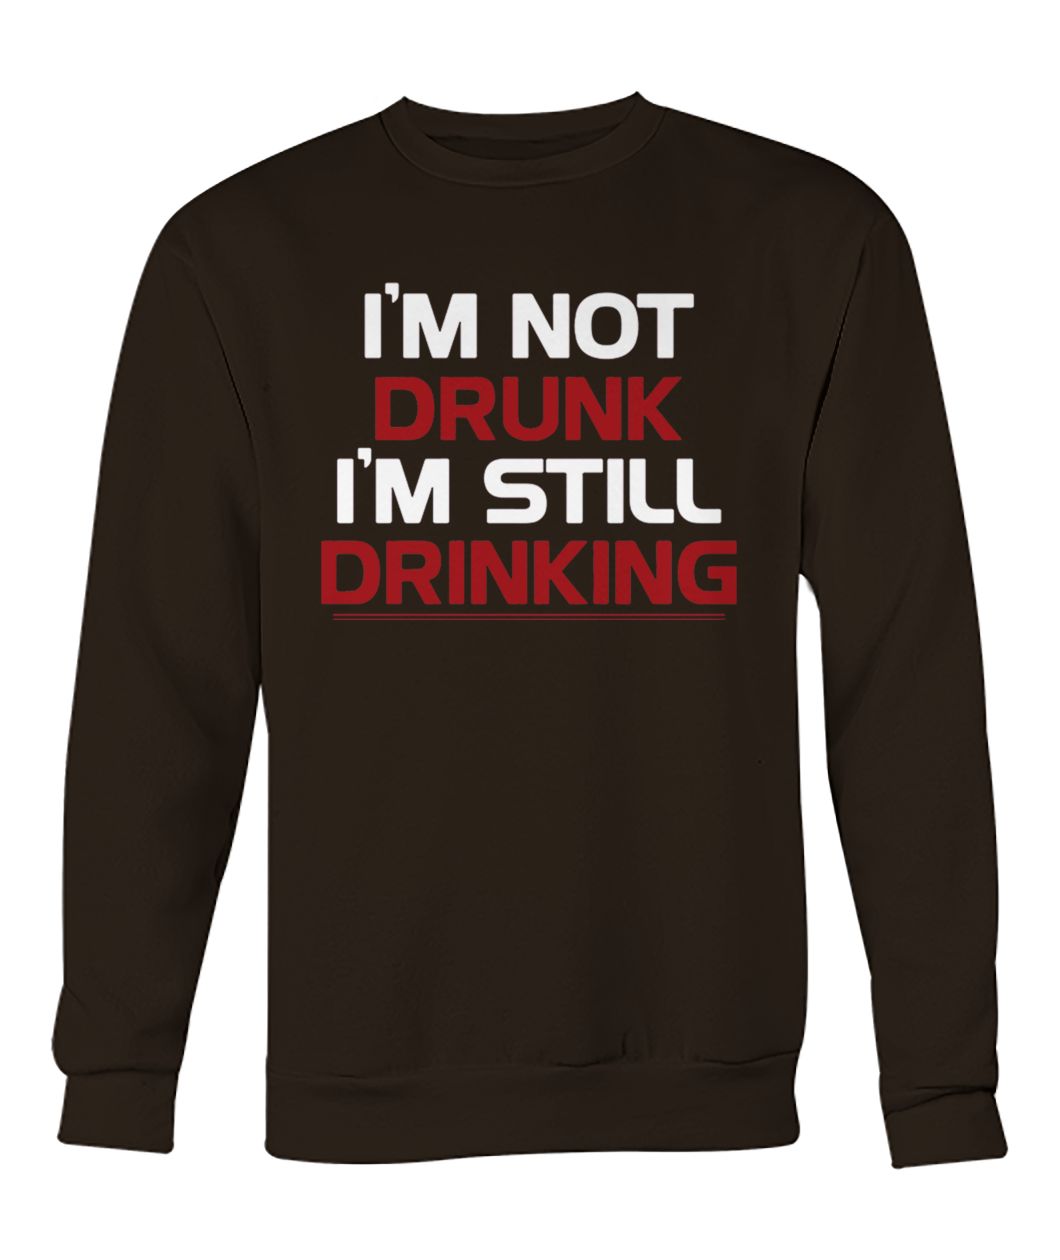 I'm not drunk I'm still drinking crew neck sweatshirt